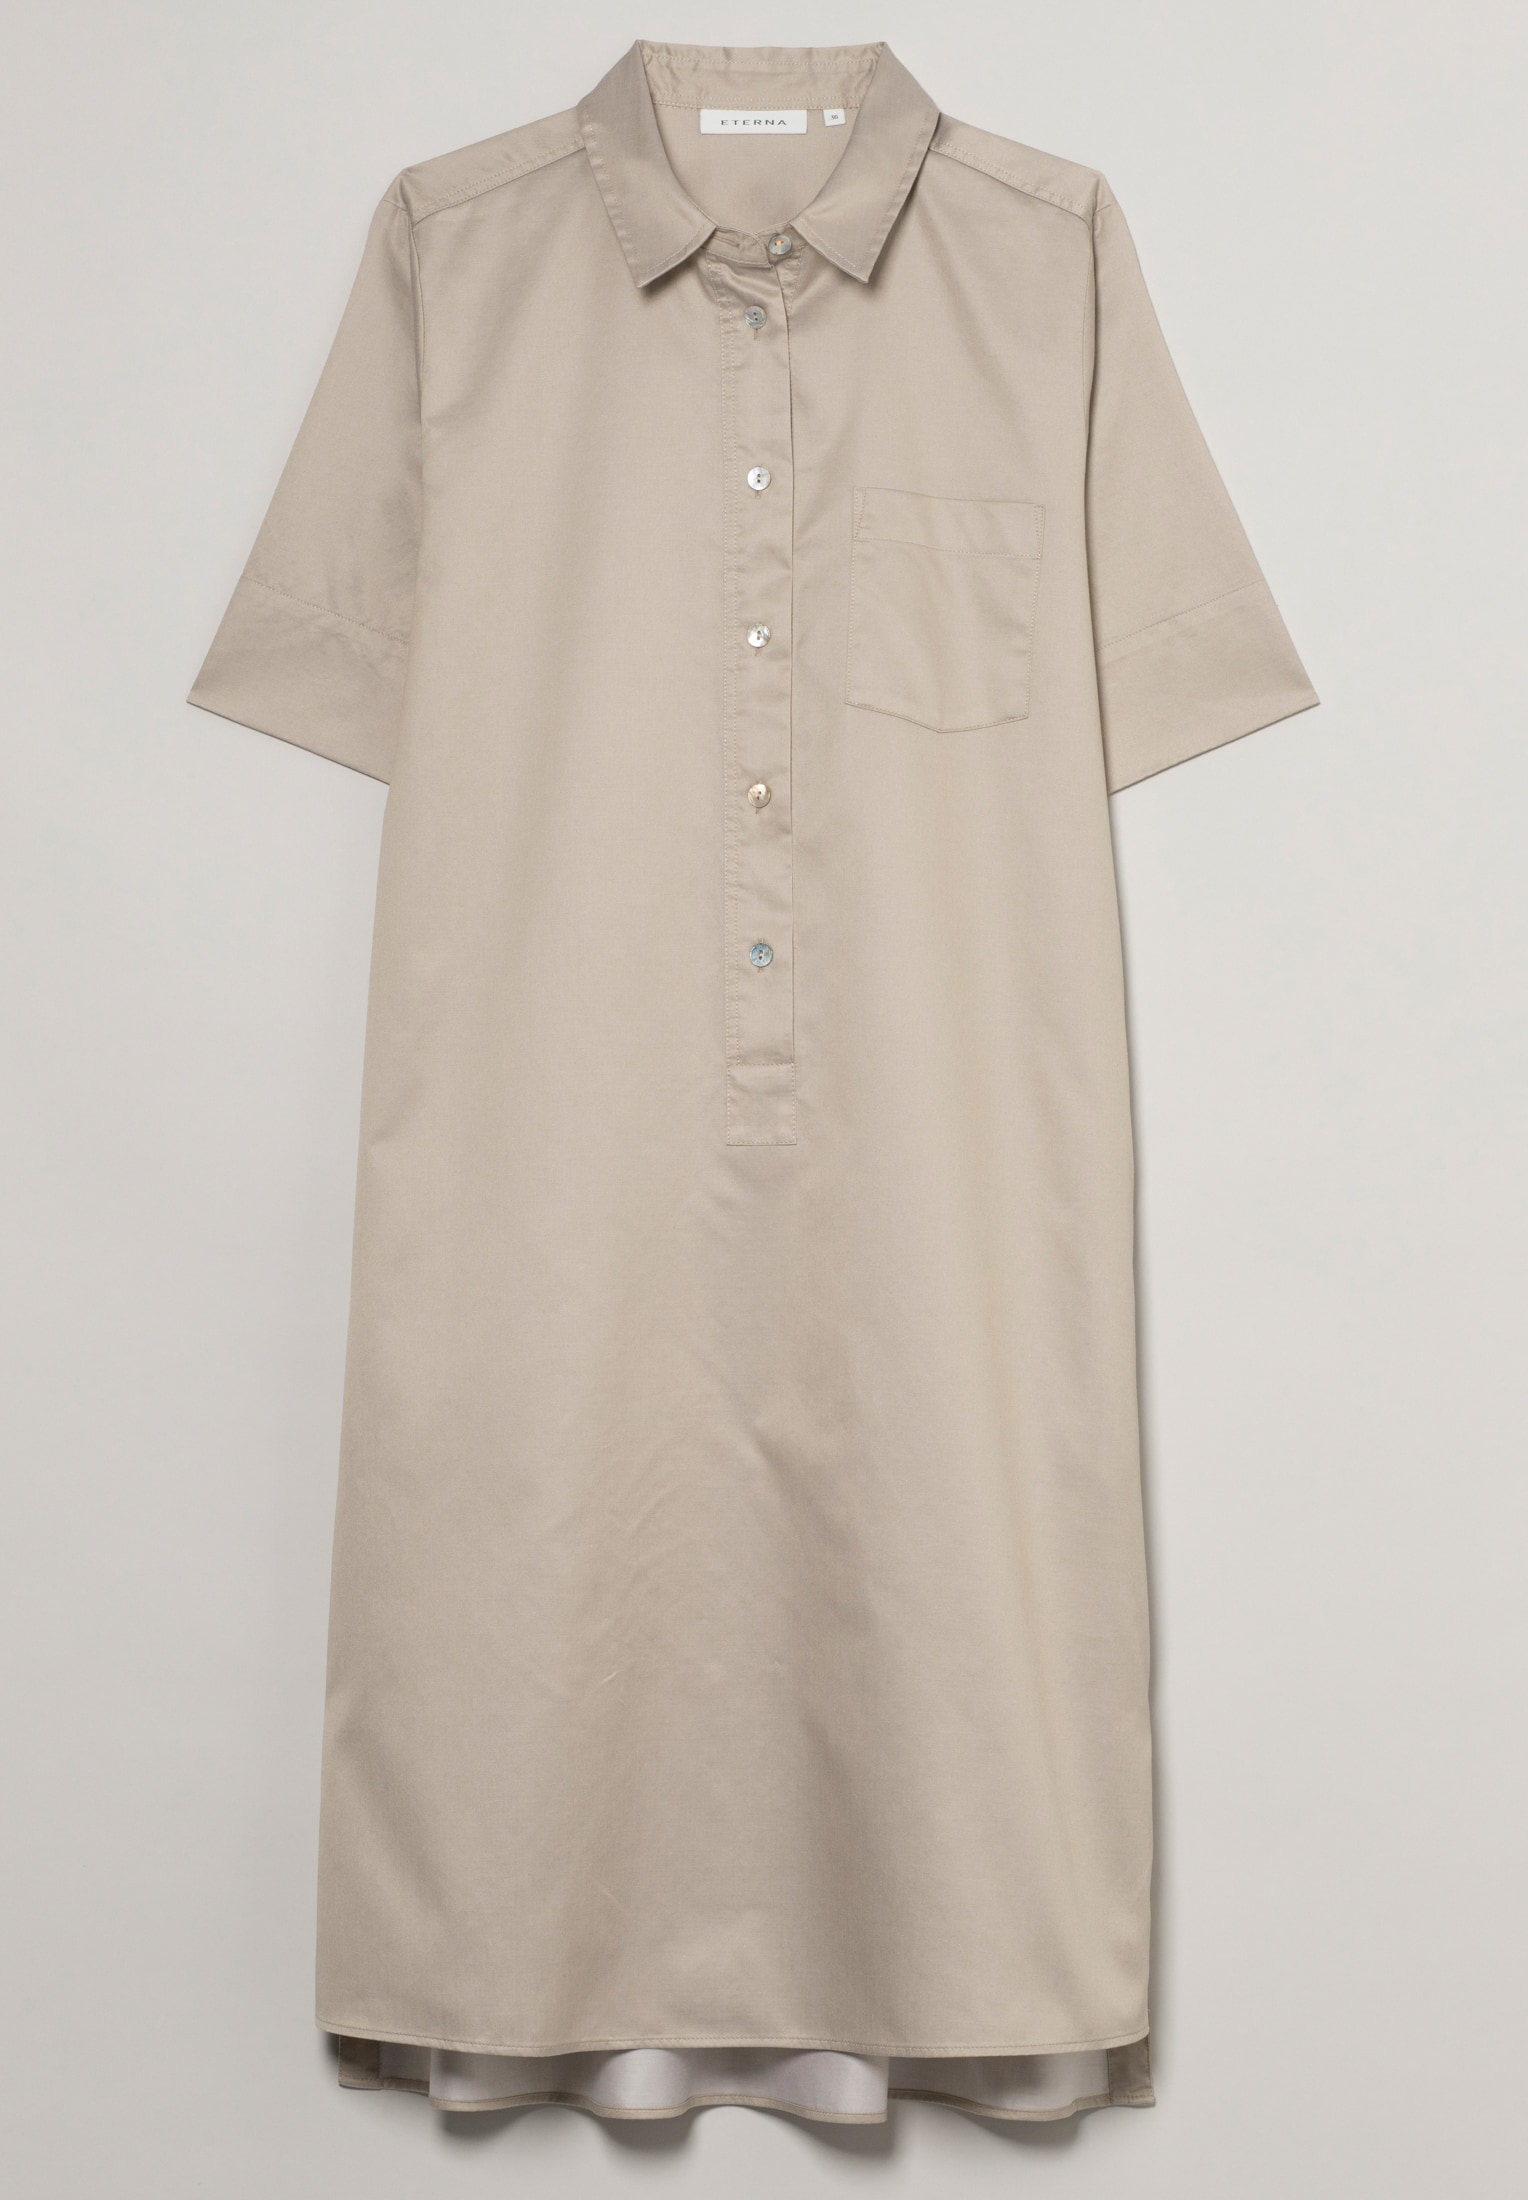 Soft Luxury Shirt Bluse grün | Kurzarm unifarben | 42 | grün 2DR00234-04-01-42-1/2 in 